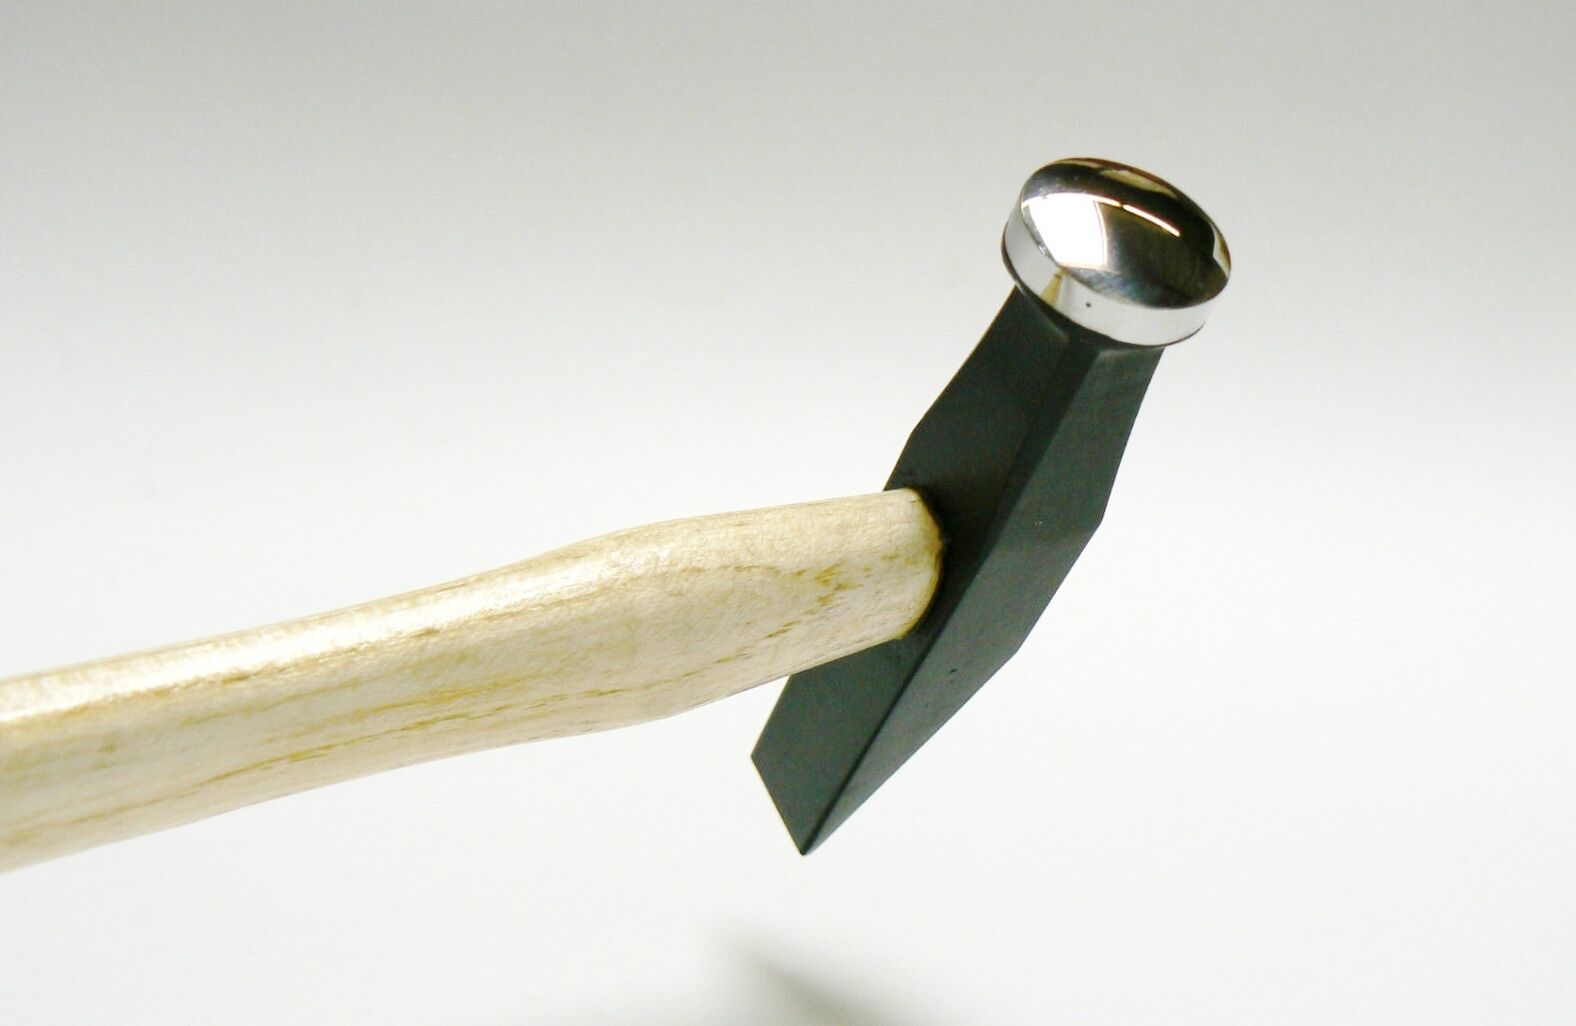 Goldsmith Hammers Bowed & Cross-peen Silversmith Hammer Jewelry Making Tool